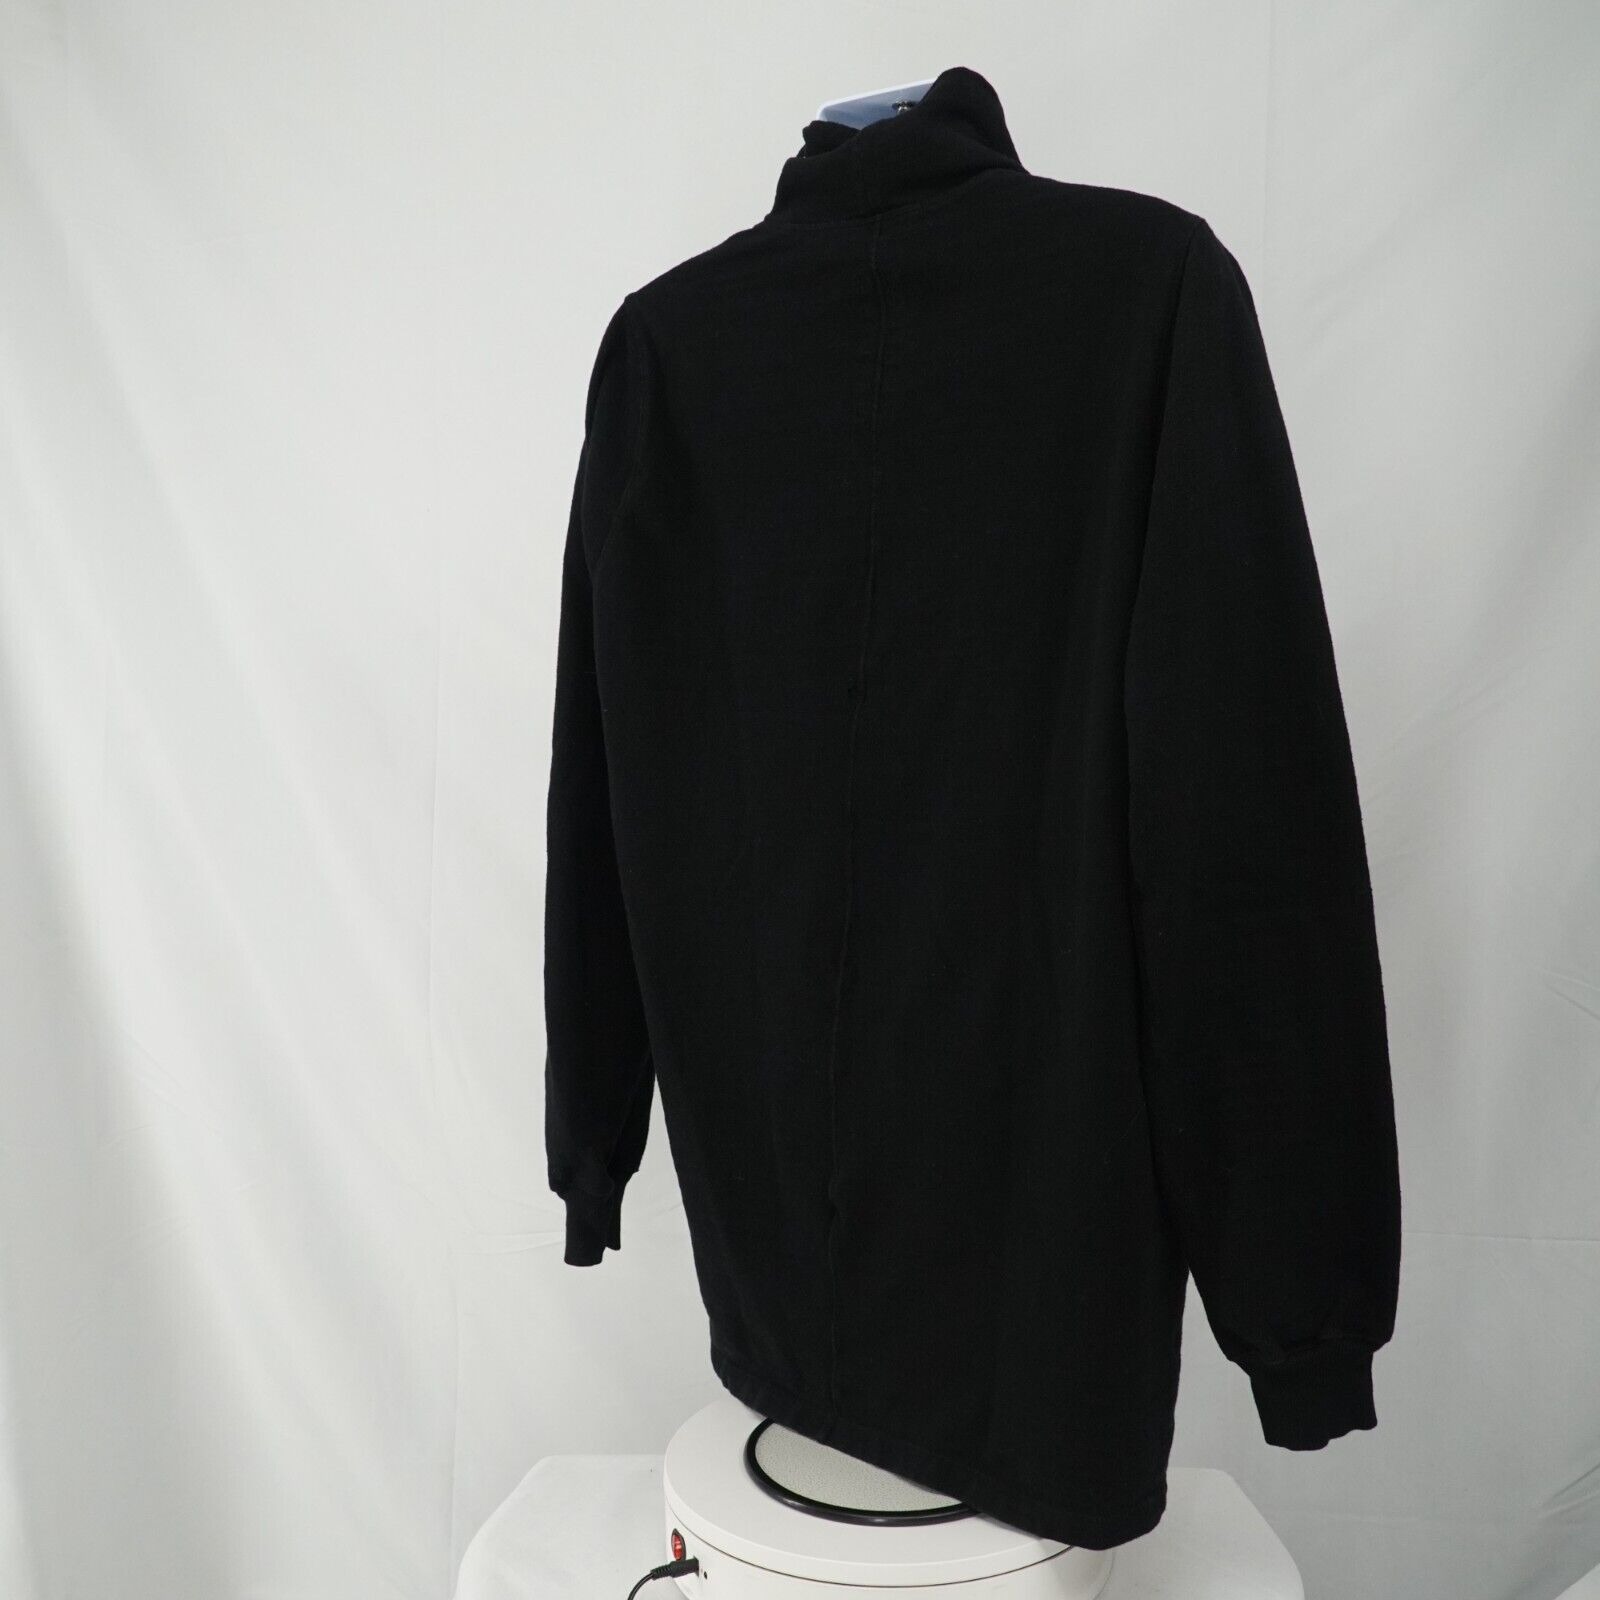 Rick Black Turtleneck Sweater Size Medium FW17 Glitter - 15